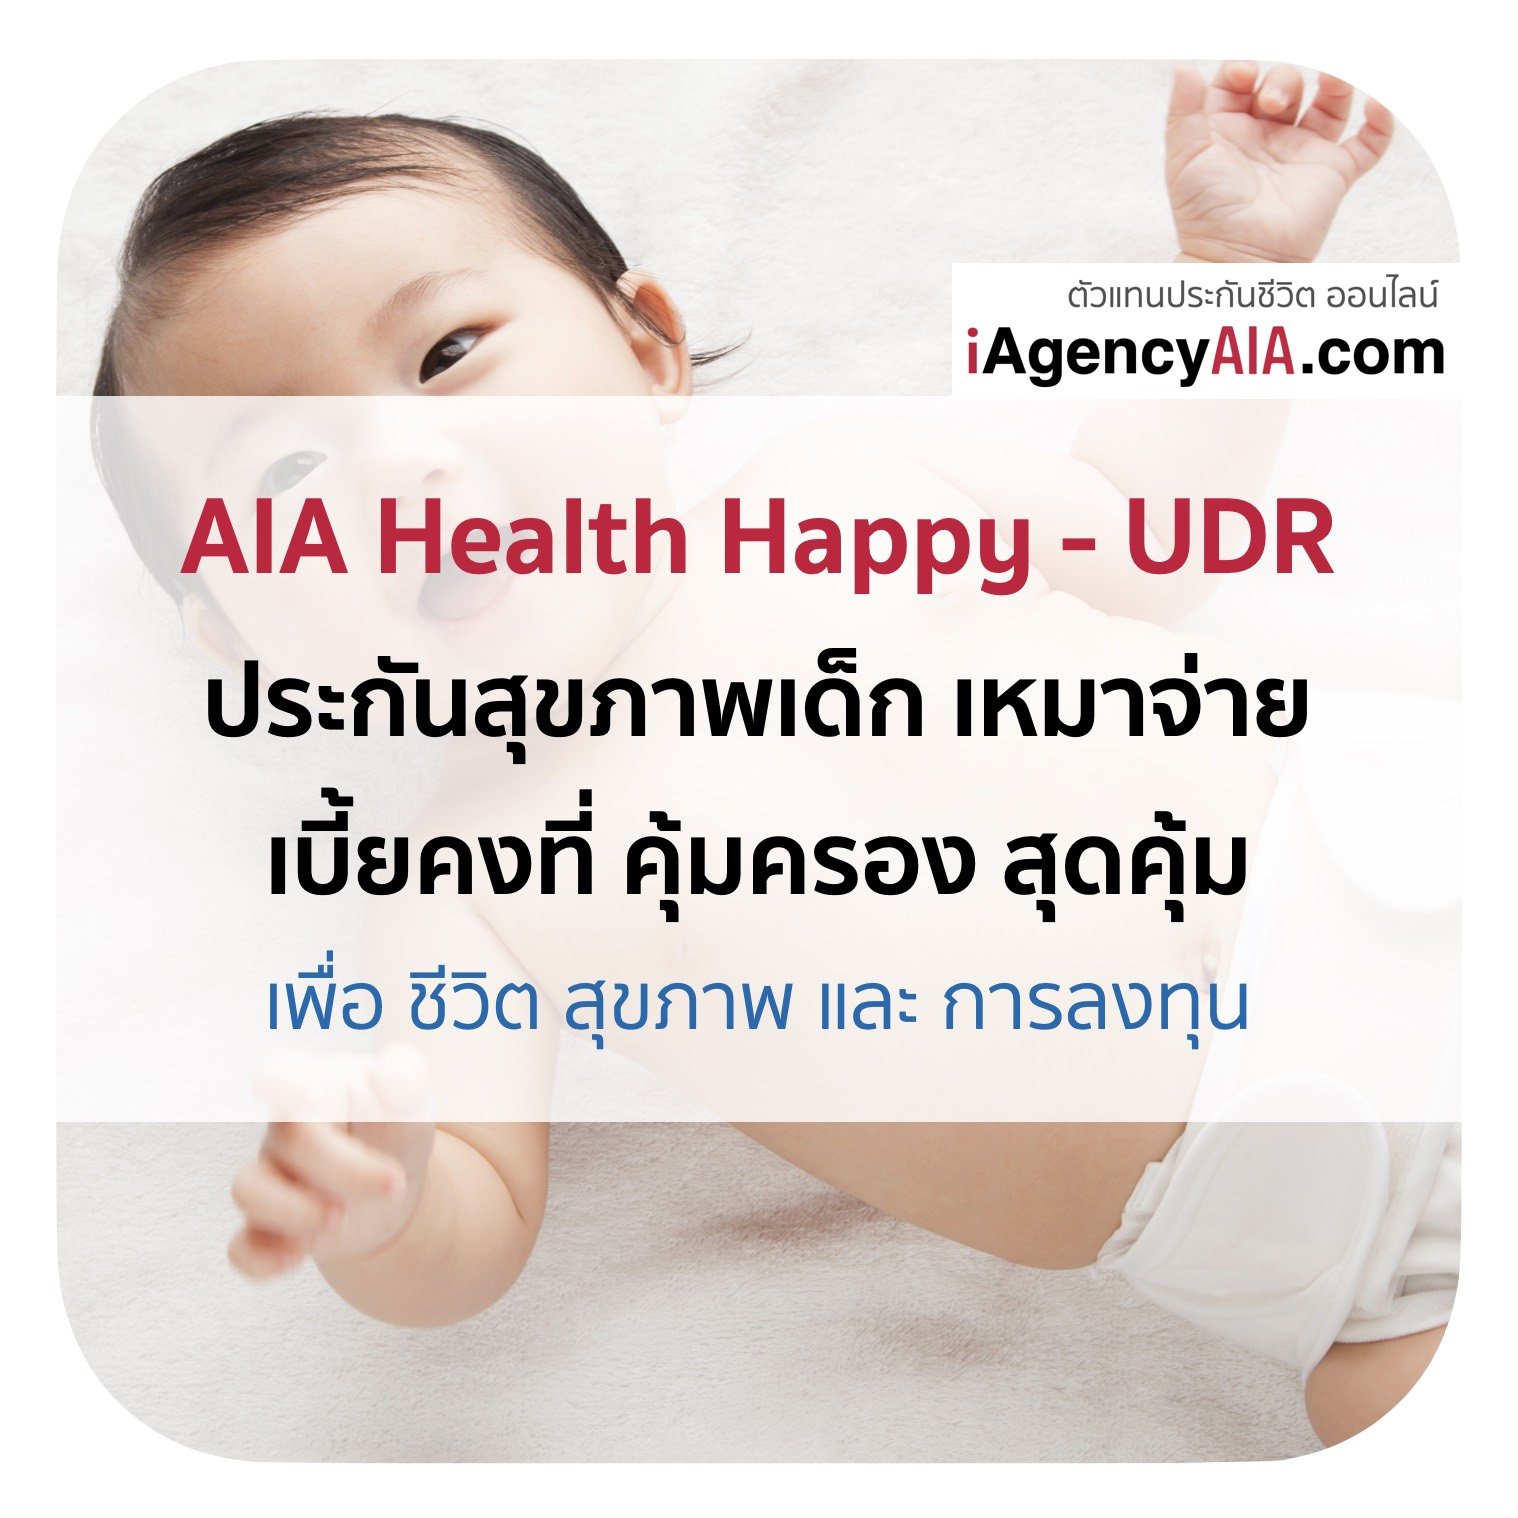 AIA Health Happy UDR ประกันสุขภาพเด็กแบบเบี้ยคงที่ และ ไม่จ่ายทิ้ง